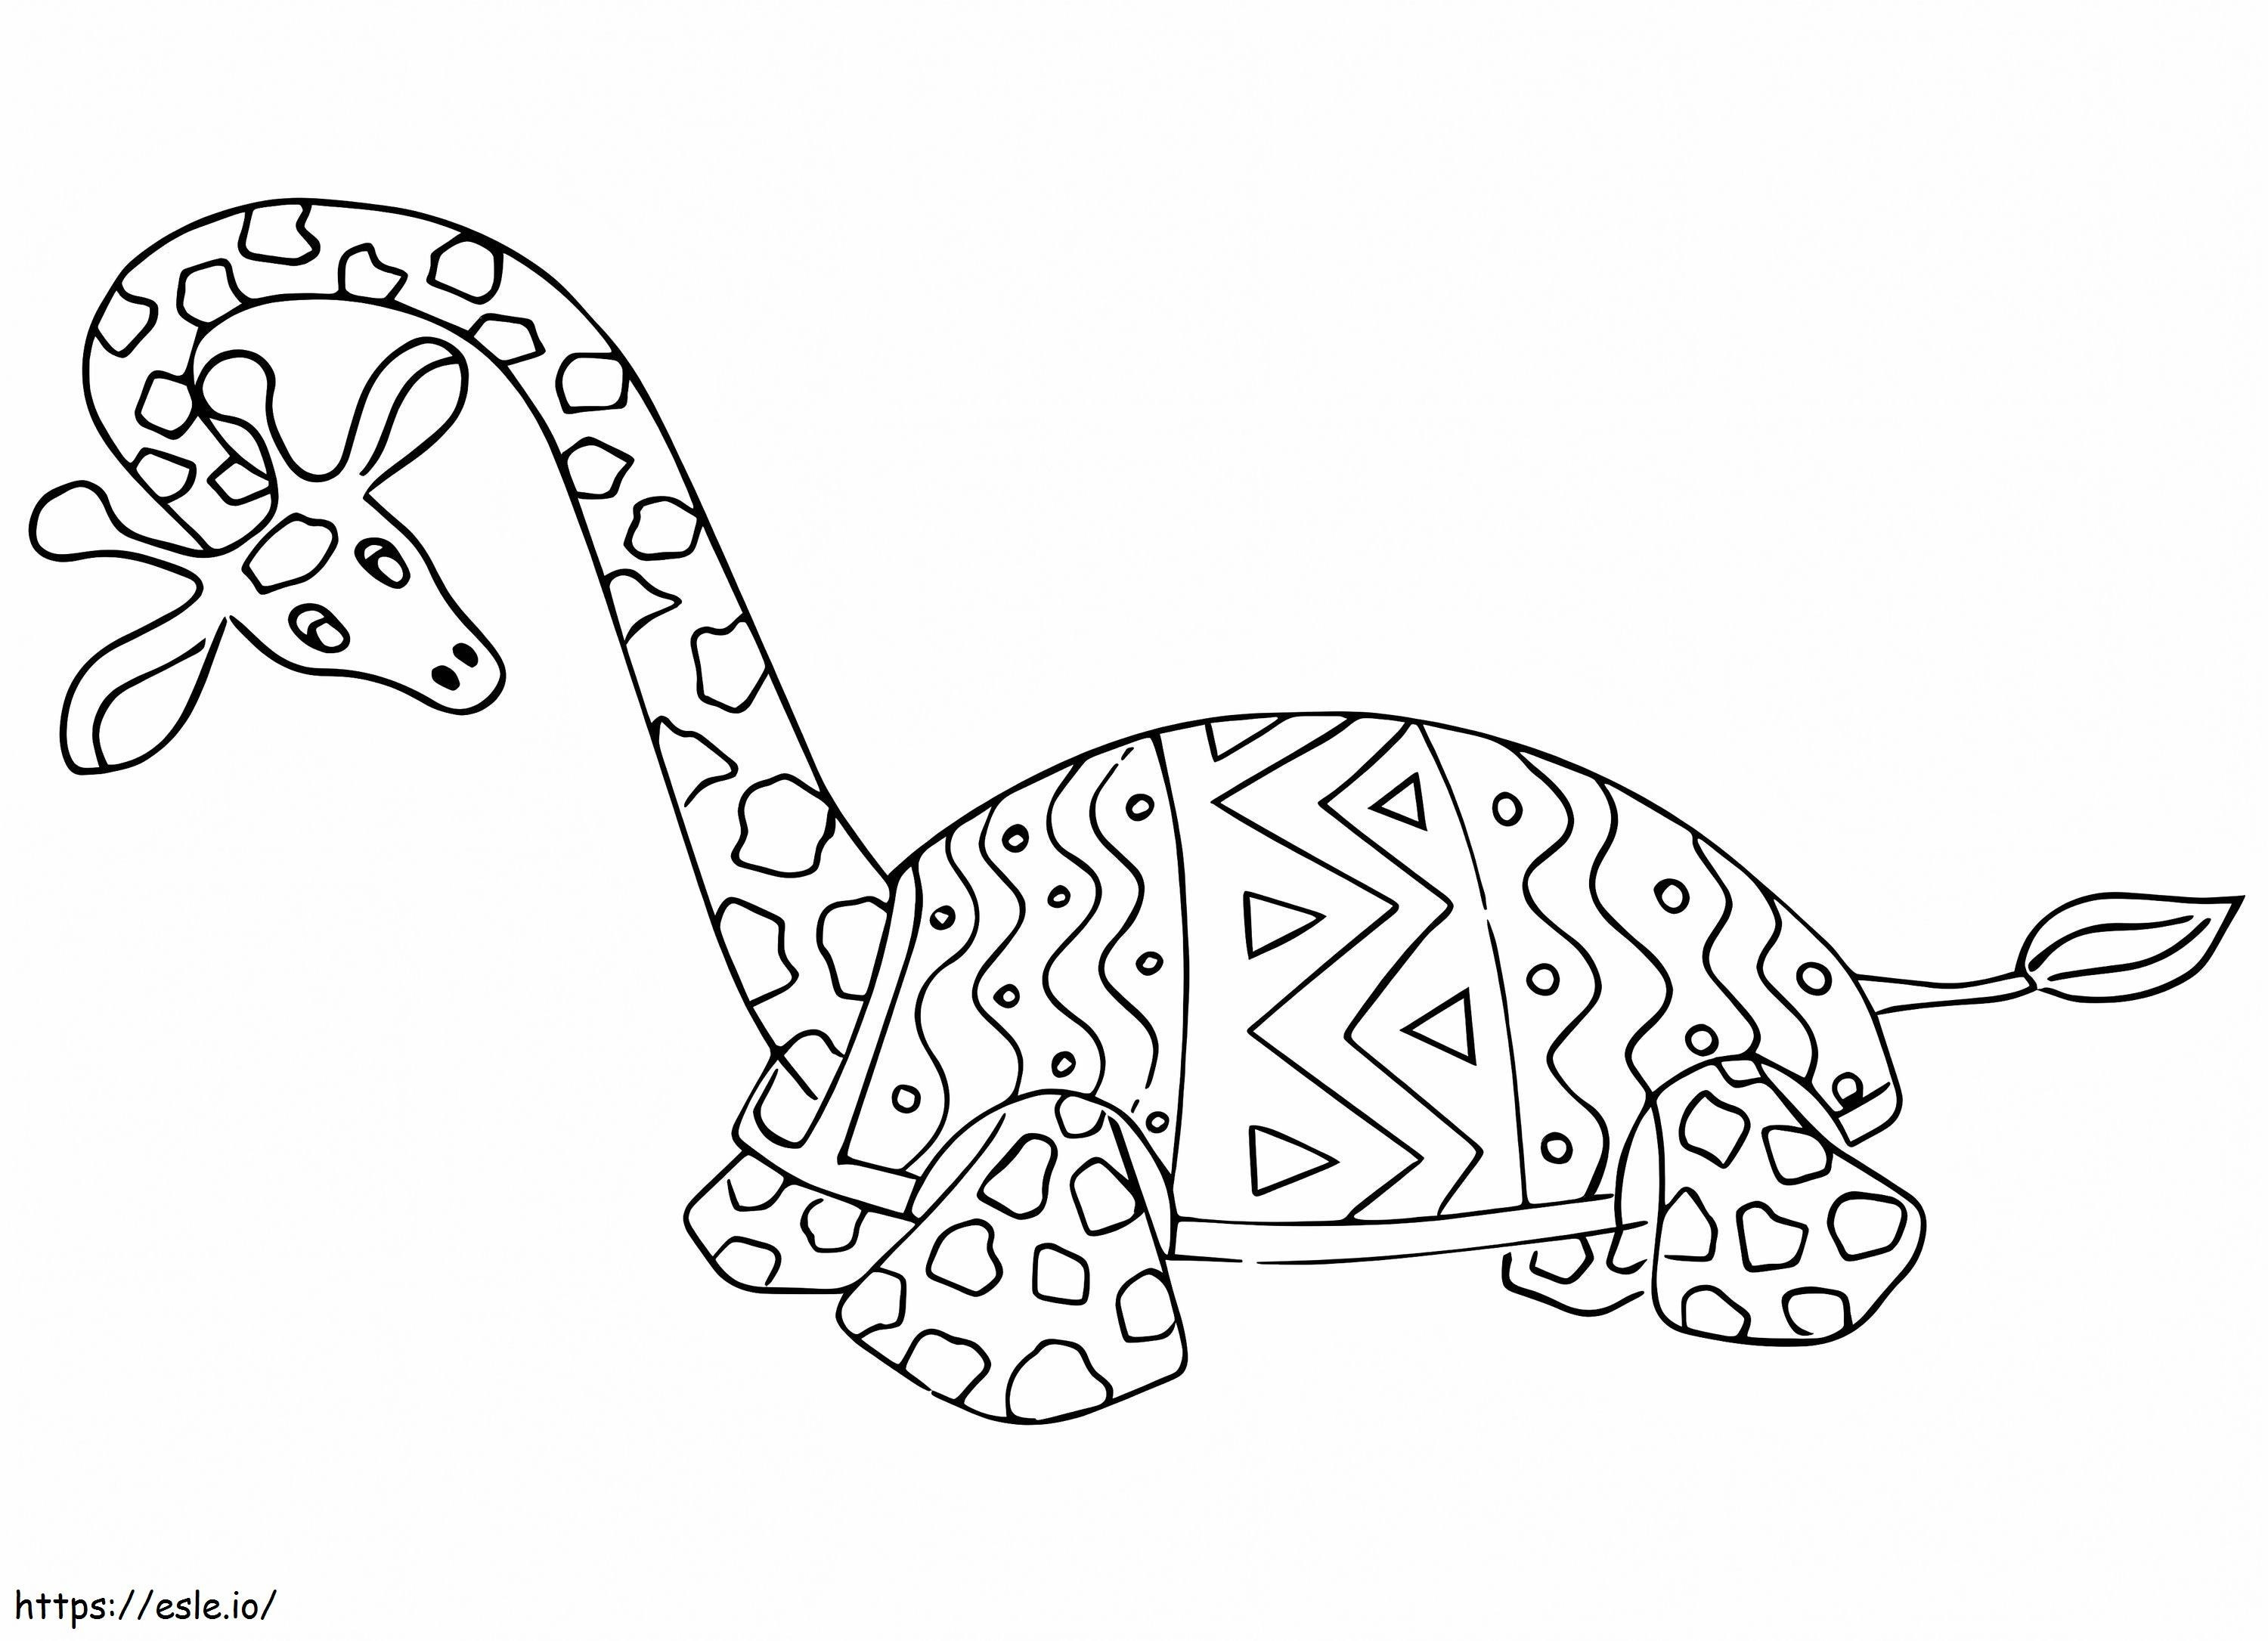 Turtle Giraffe Alebrijes coloring page